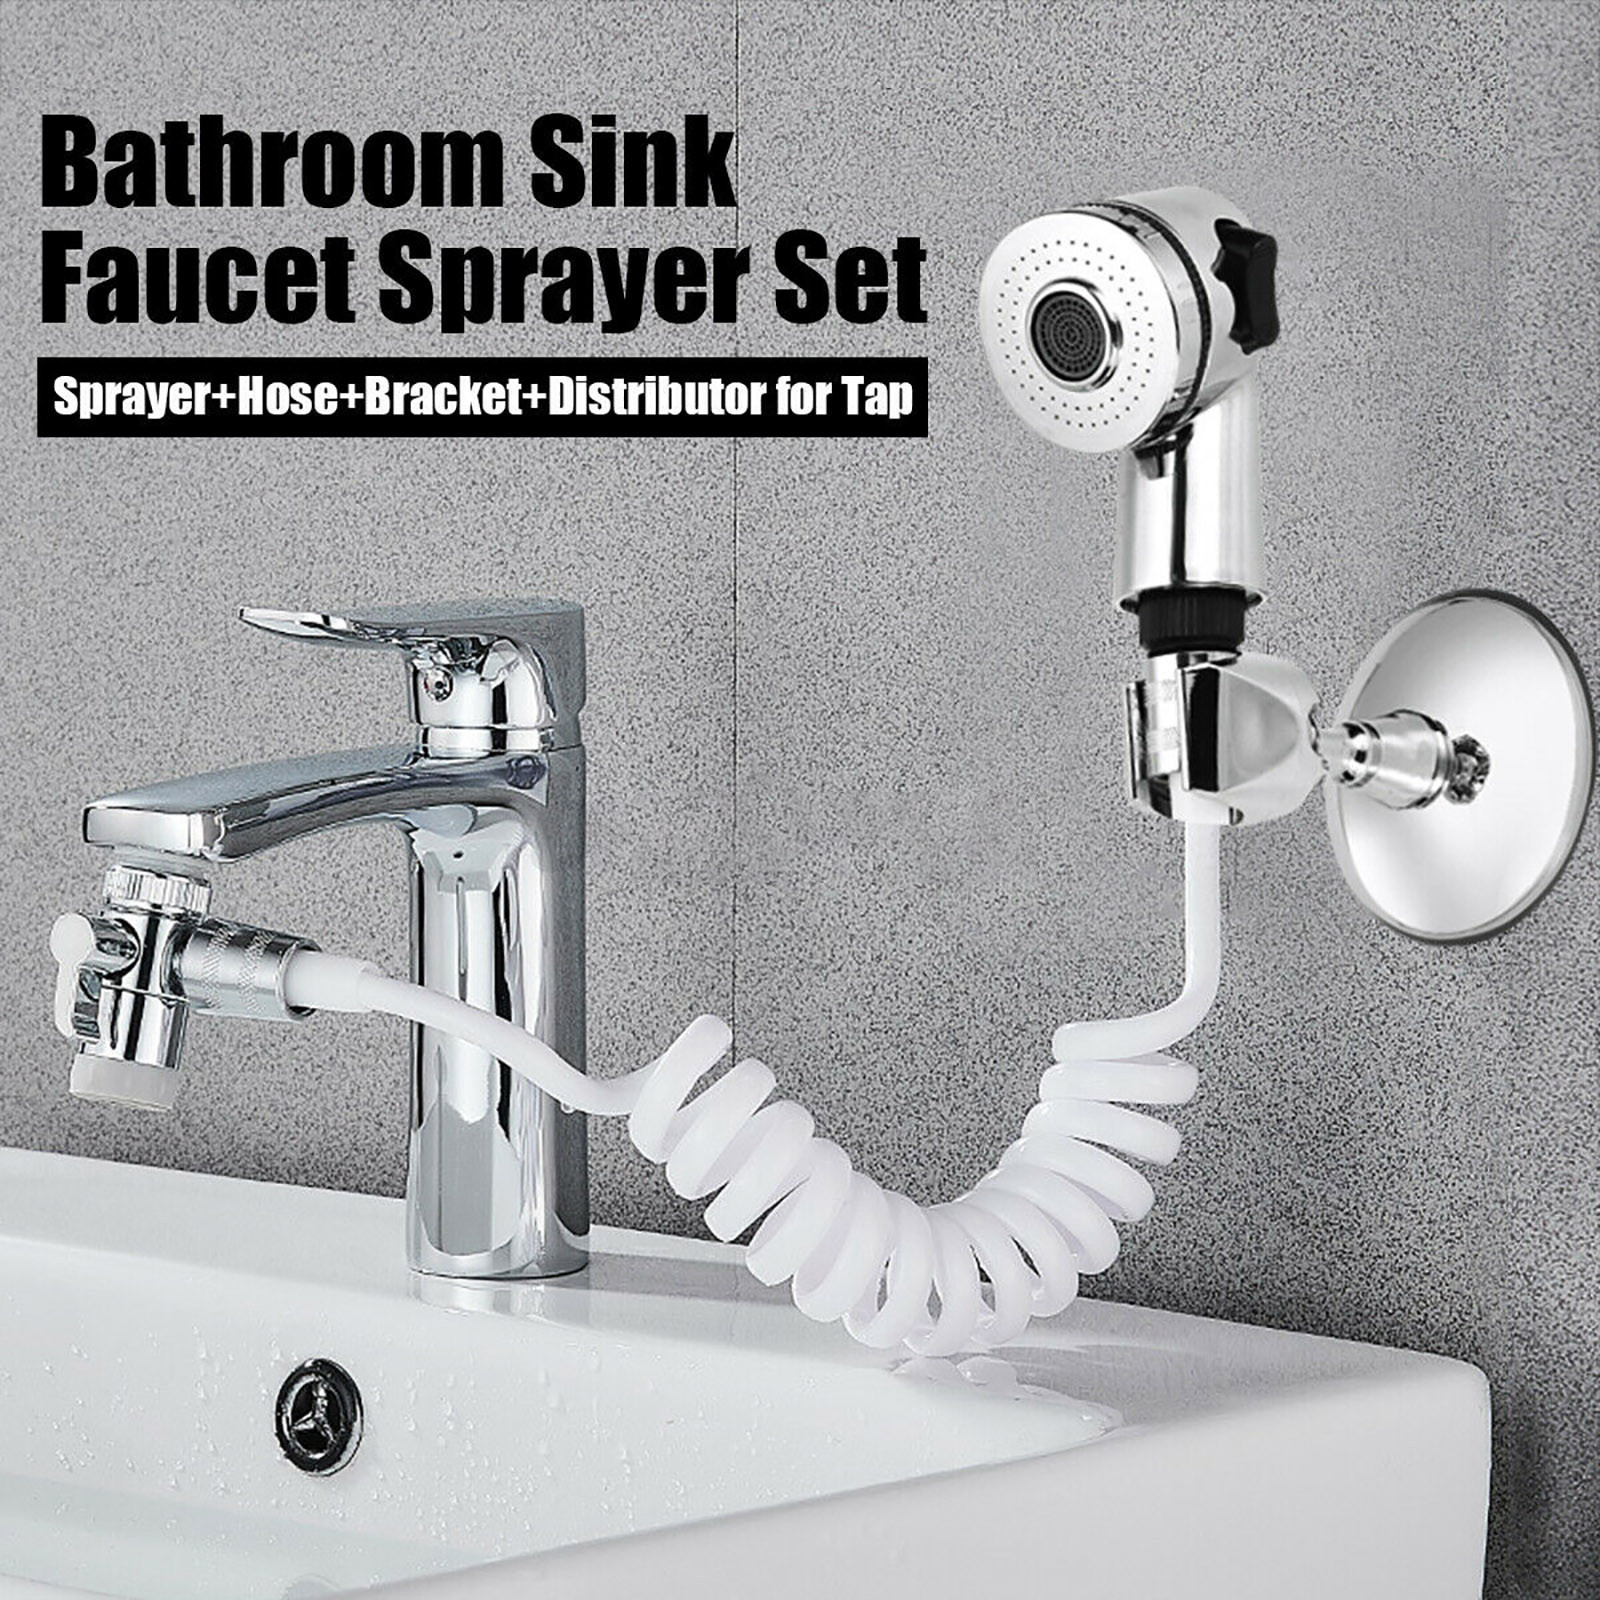 Buy Online Bathroom Sink Faucet Sprayer Water Tap Extension Nozzle Adjustable Shower Set Alitools